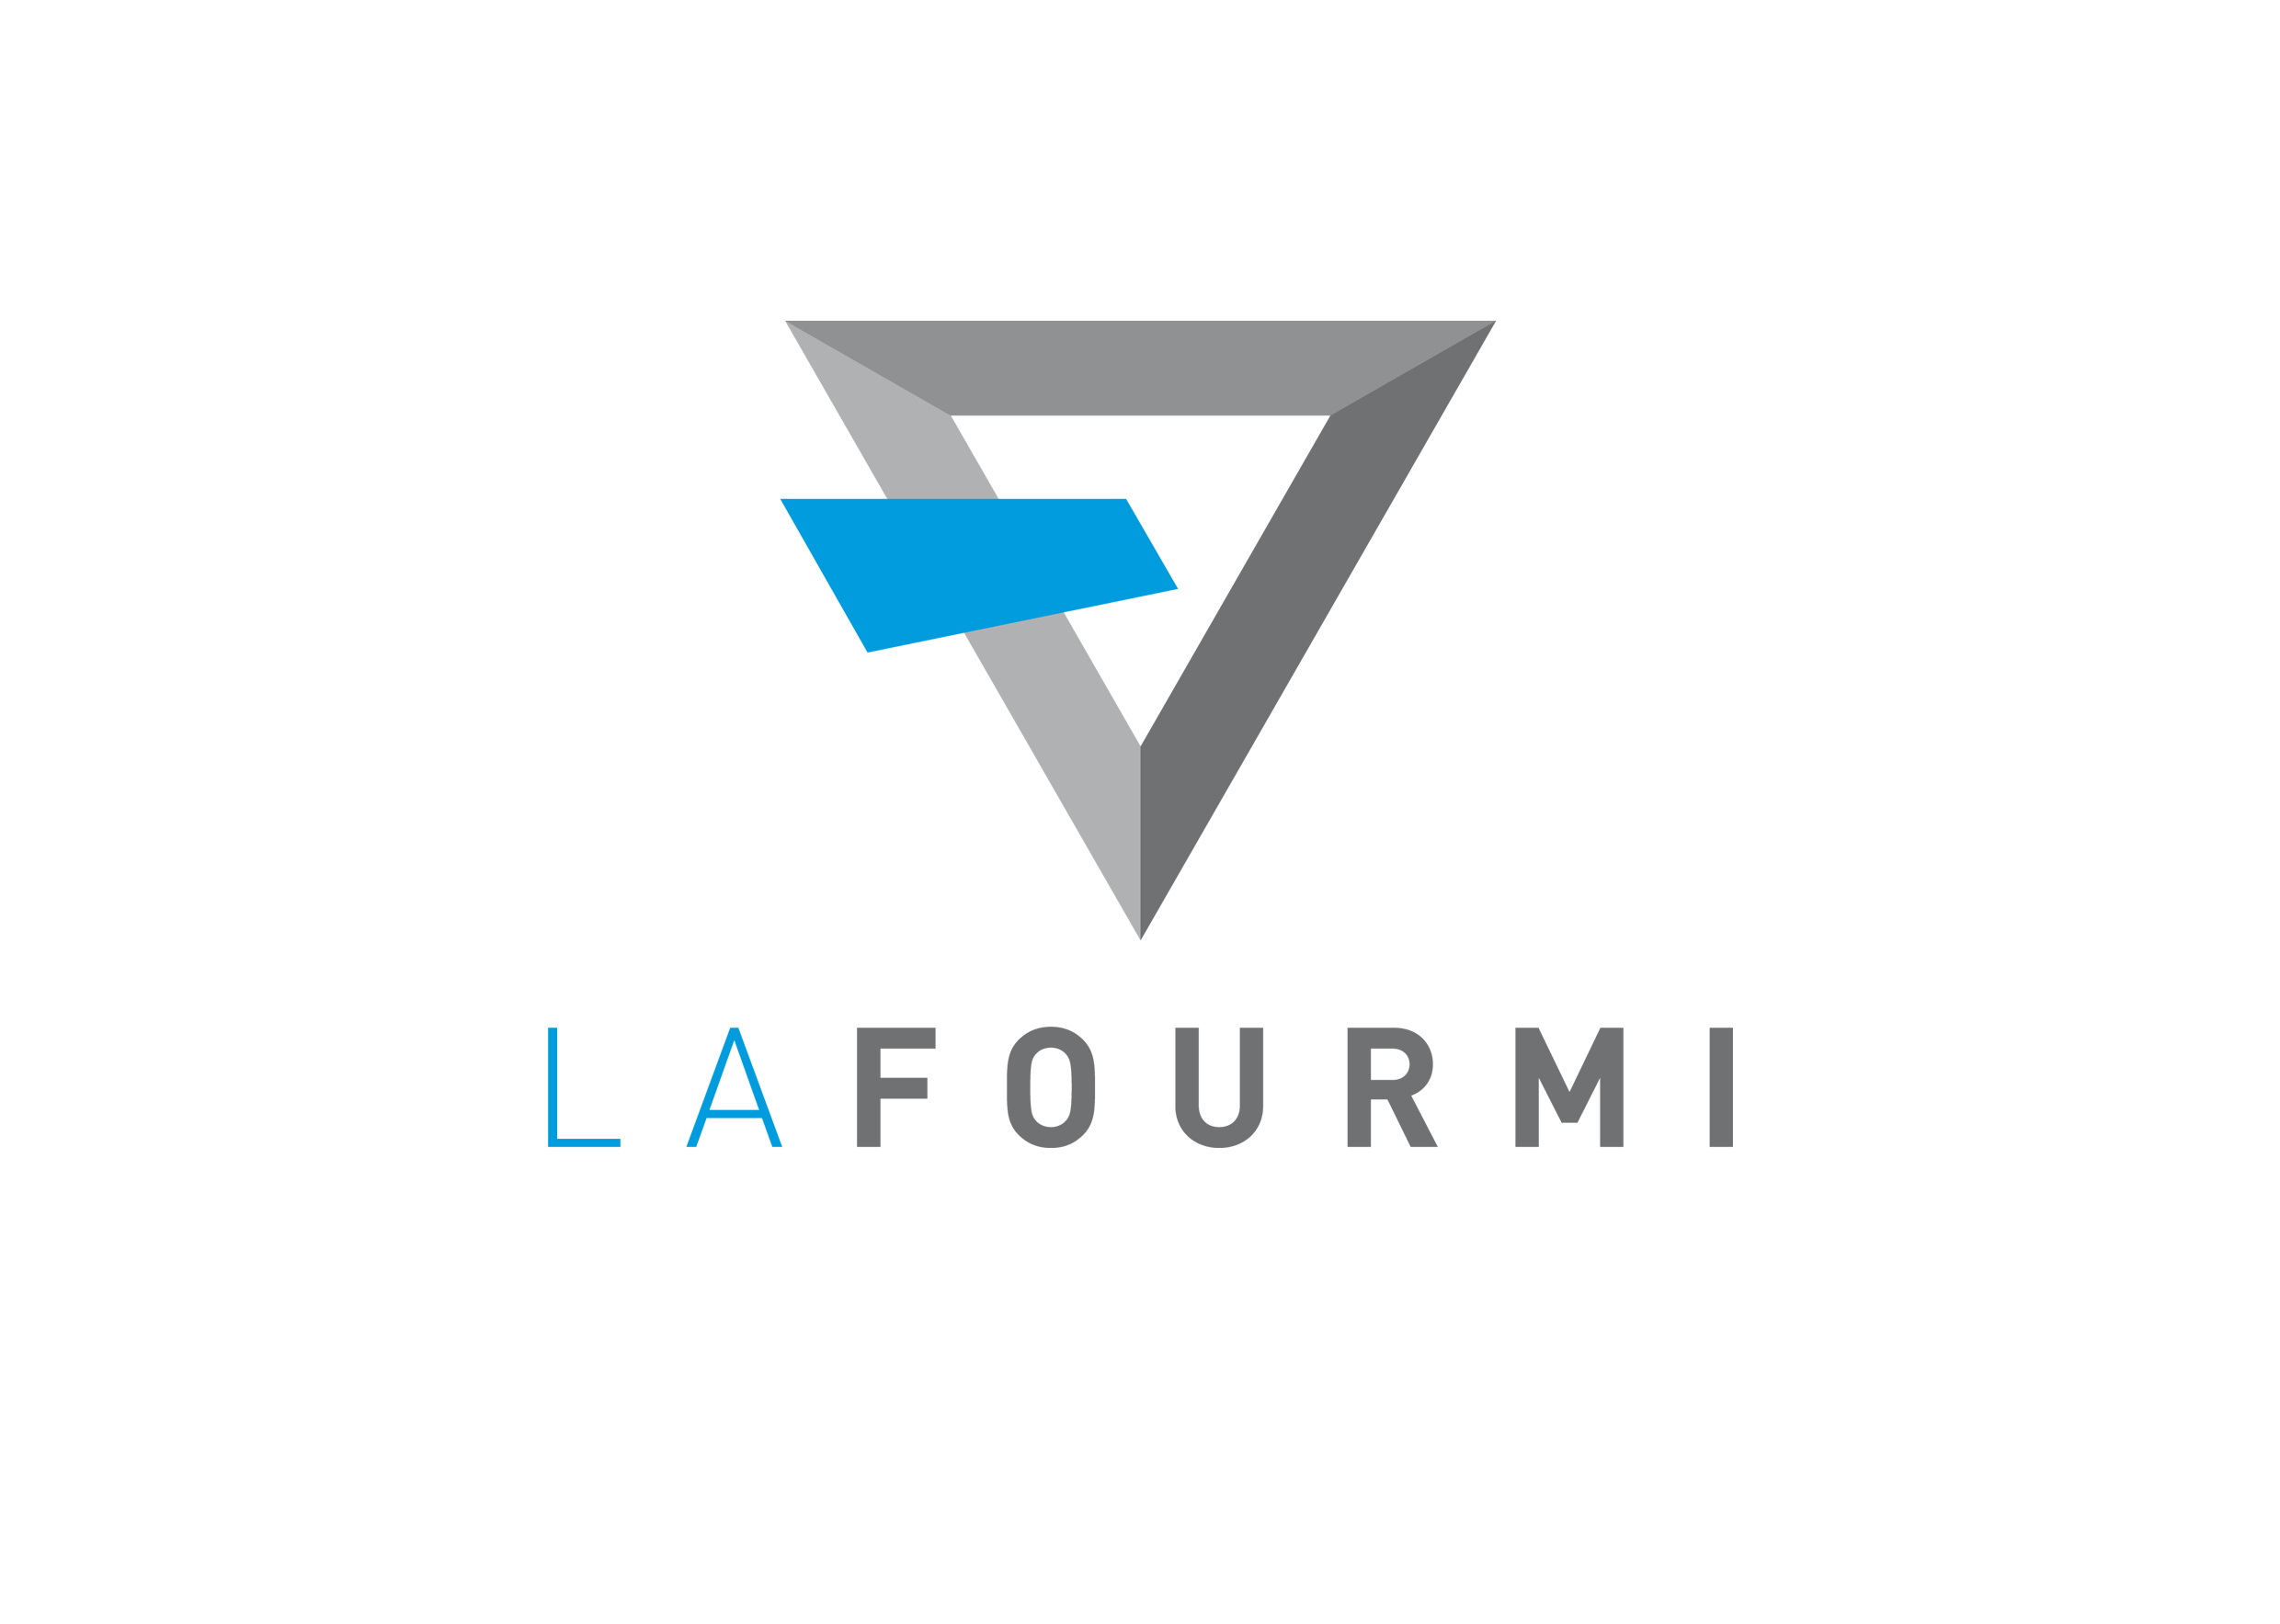 lafourmi logo